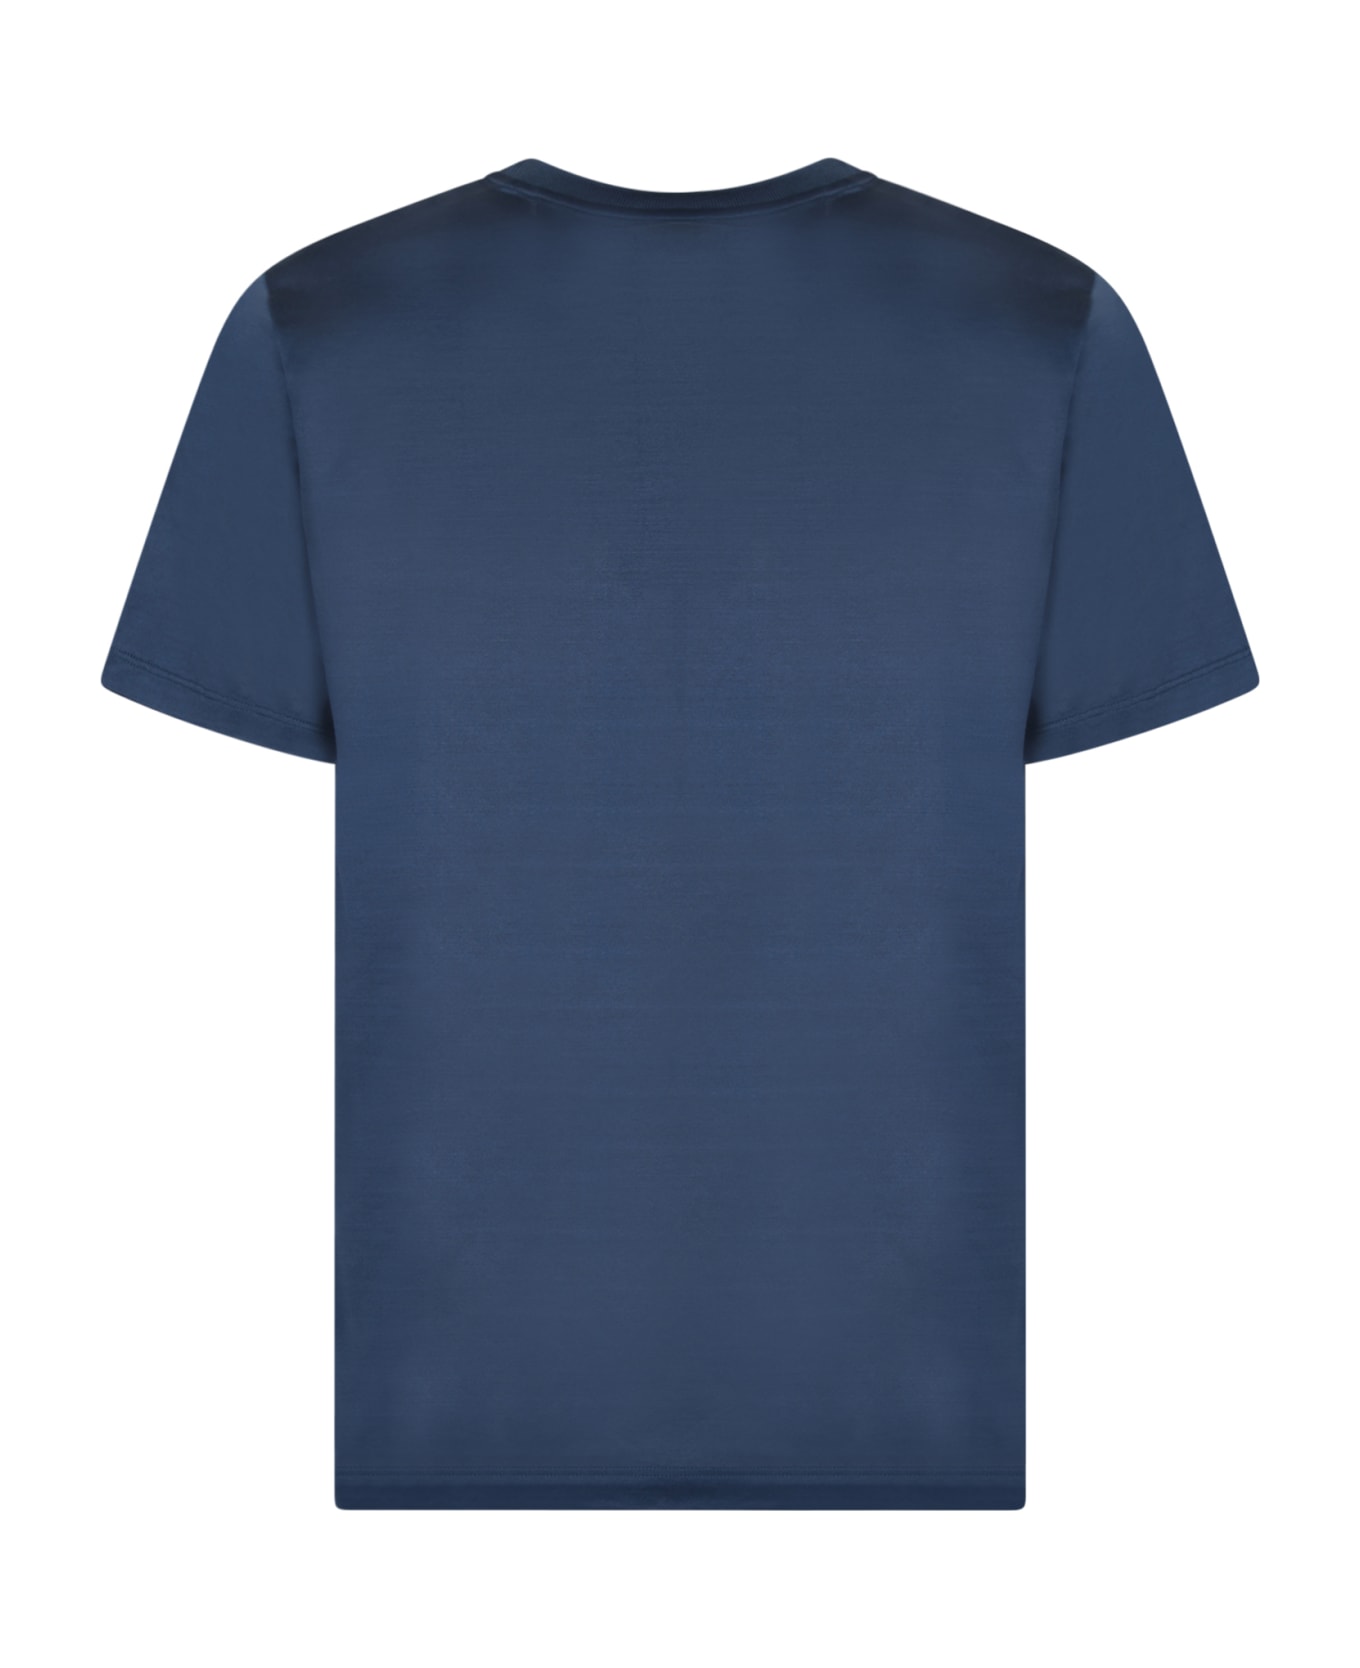 Paul Smith Pocket Blue T-shirt - Blue